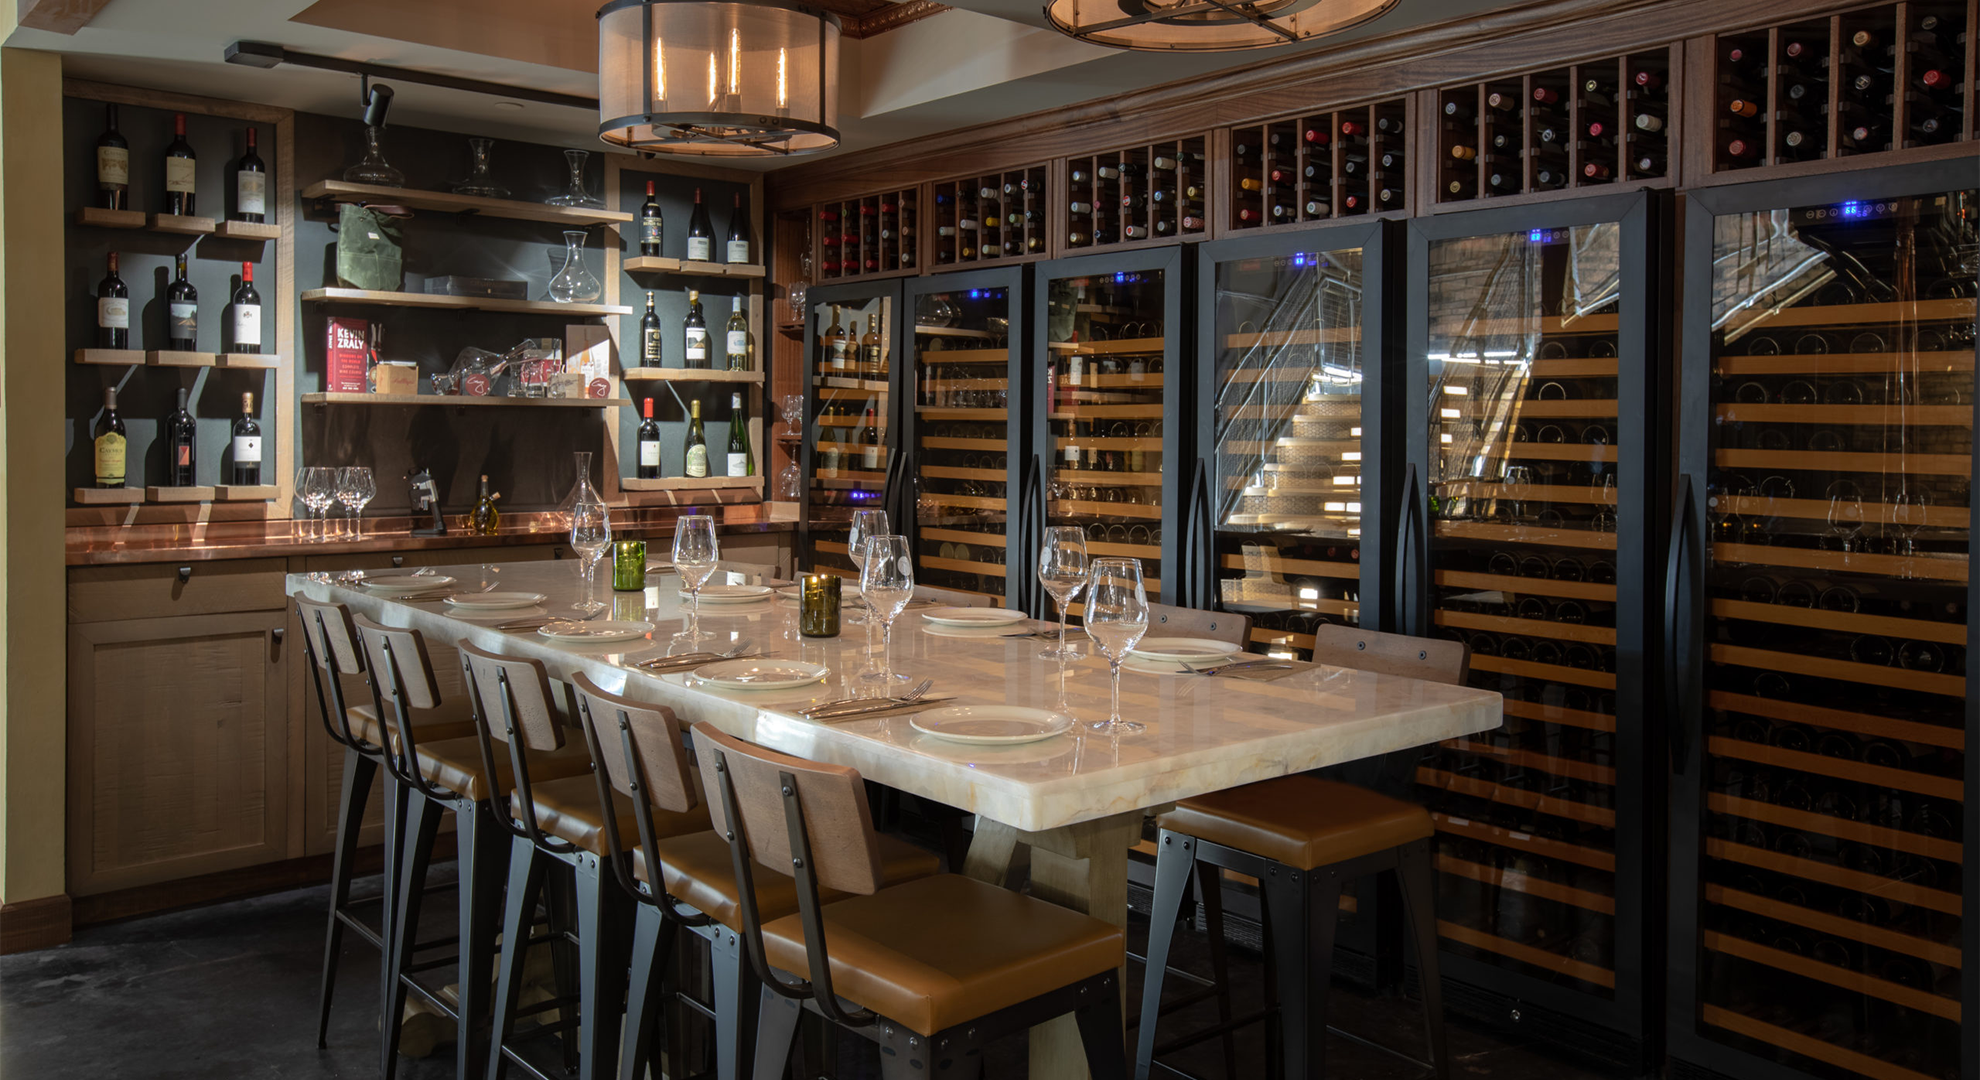 Elegant dining table setup with a background display of wine bottles, wine fridges, and wine cellar storage.